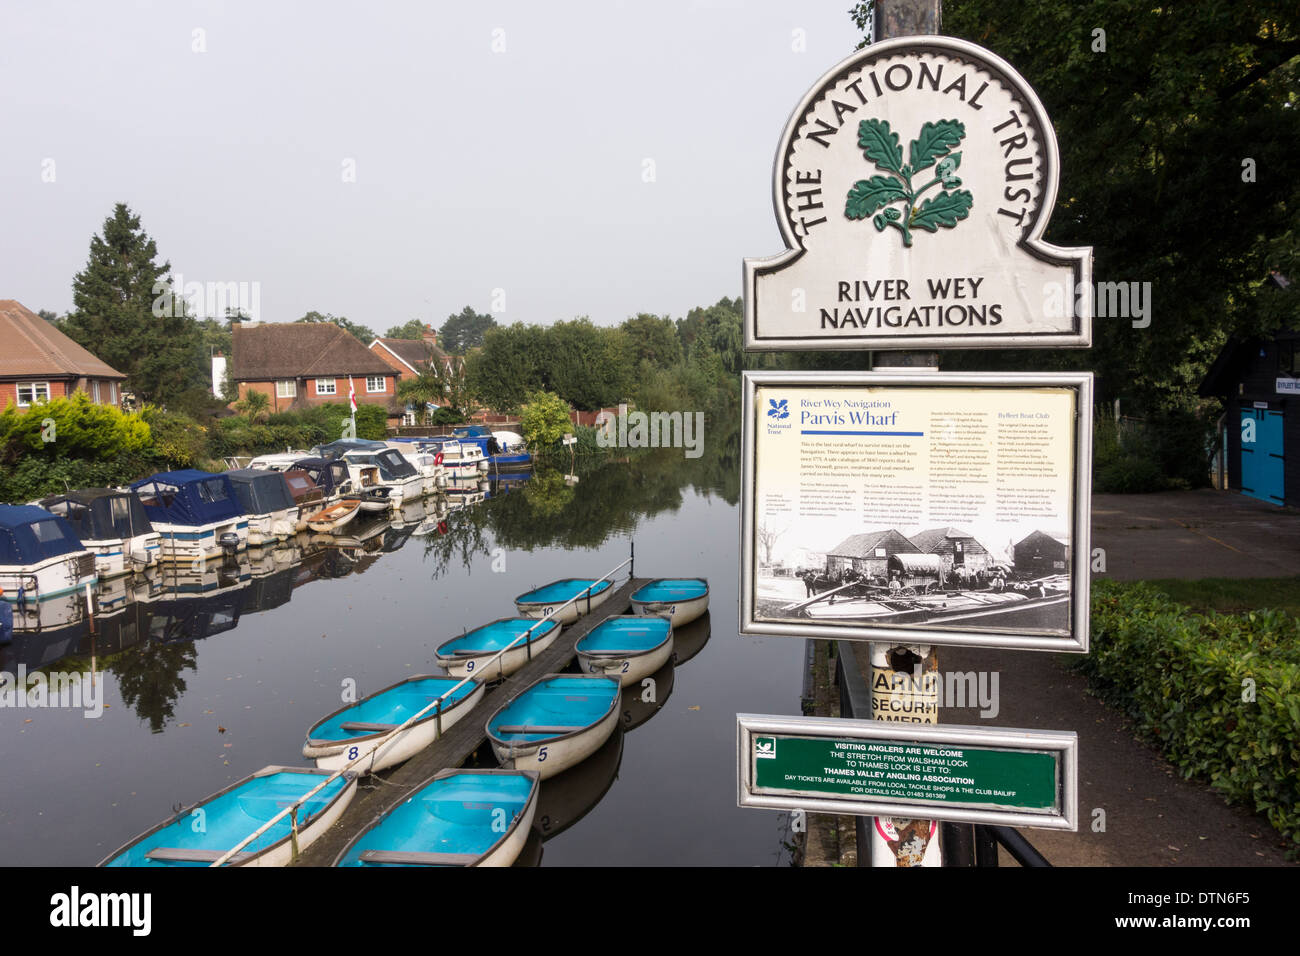 River Wey Navigations signer par le National Trust, Byfleet, Surrey, UK Banque D'Images